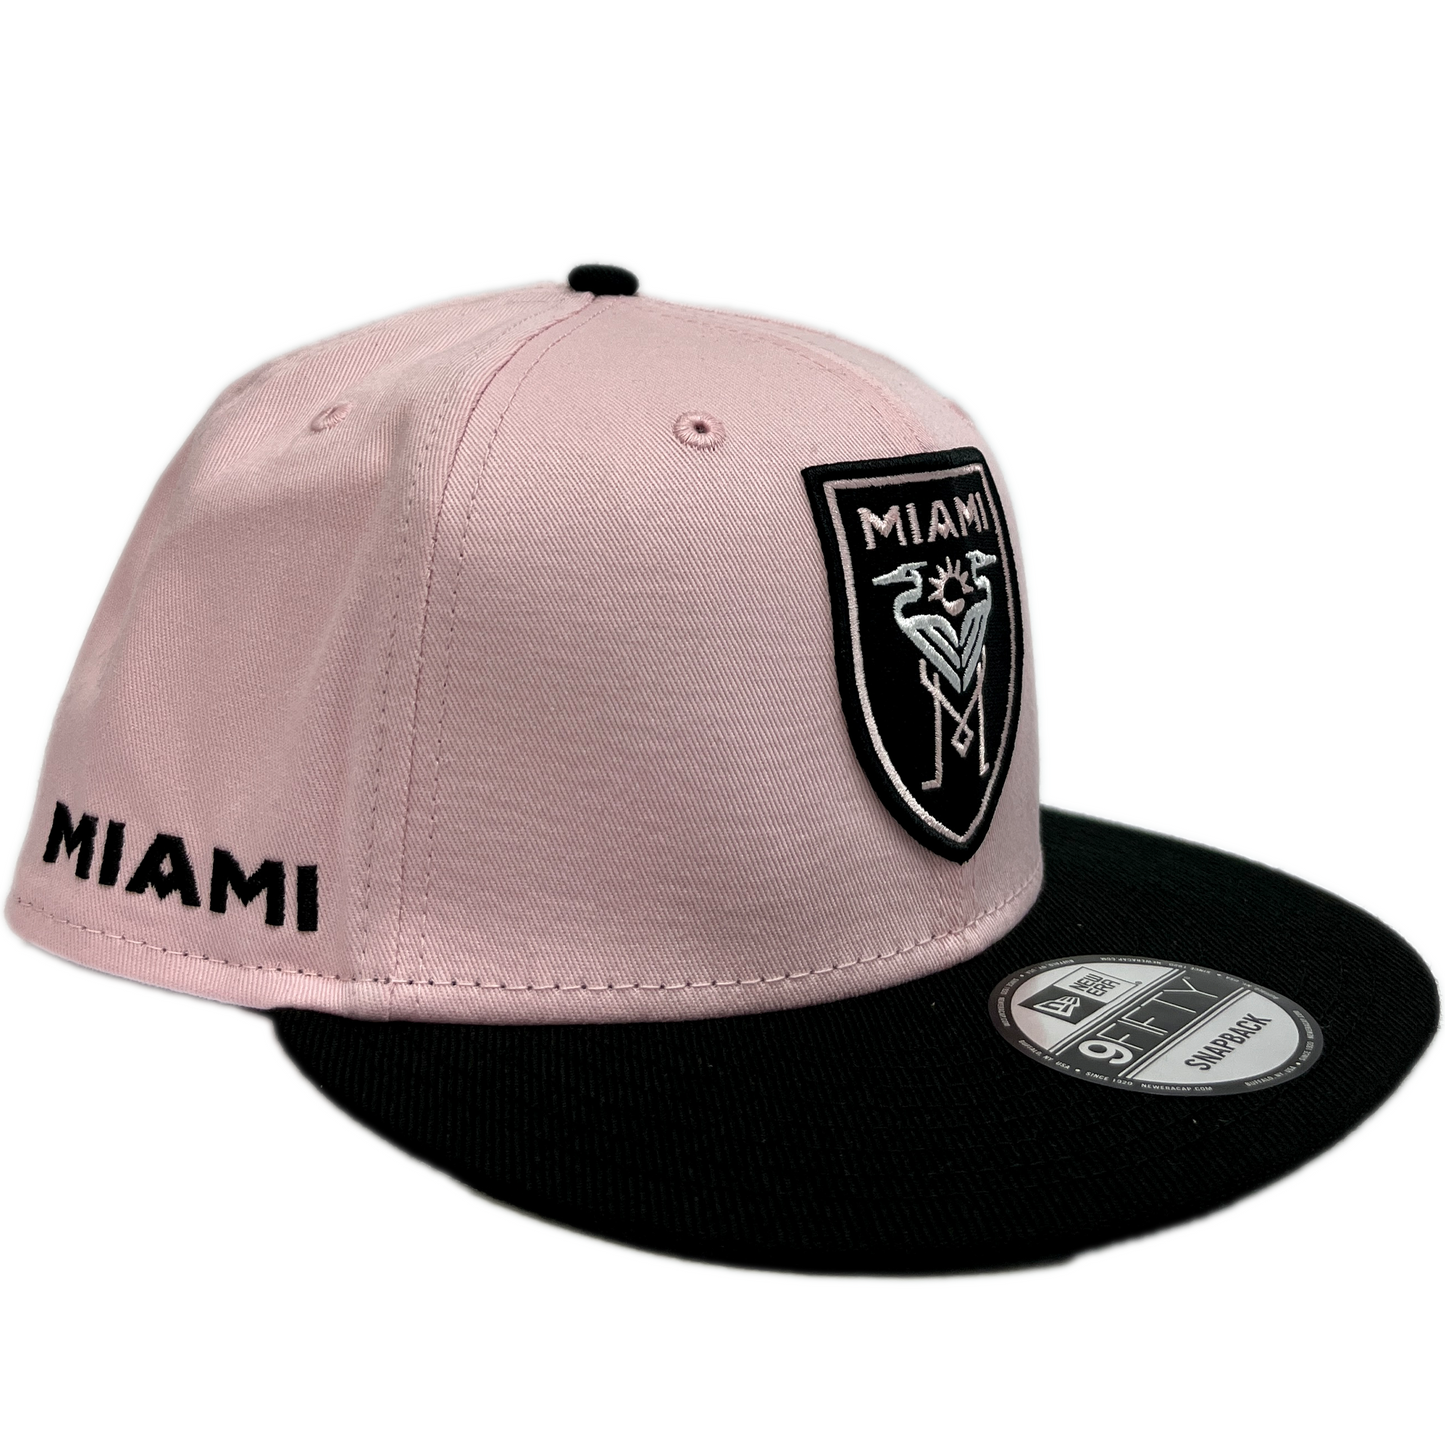 New Era Inter Miami 9FIFTY Adjustable Hat - Pink/ Black